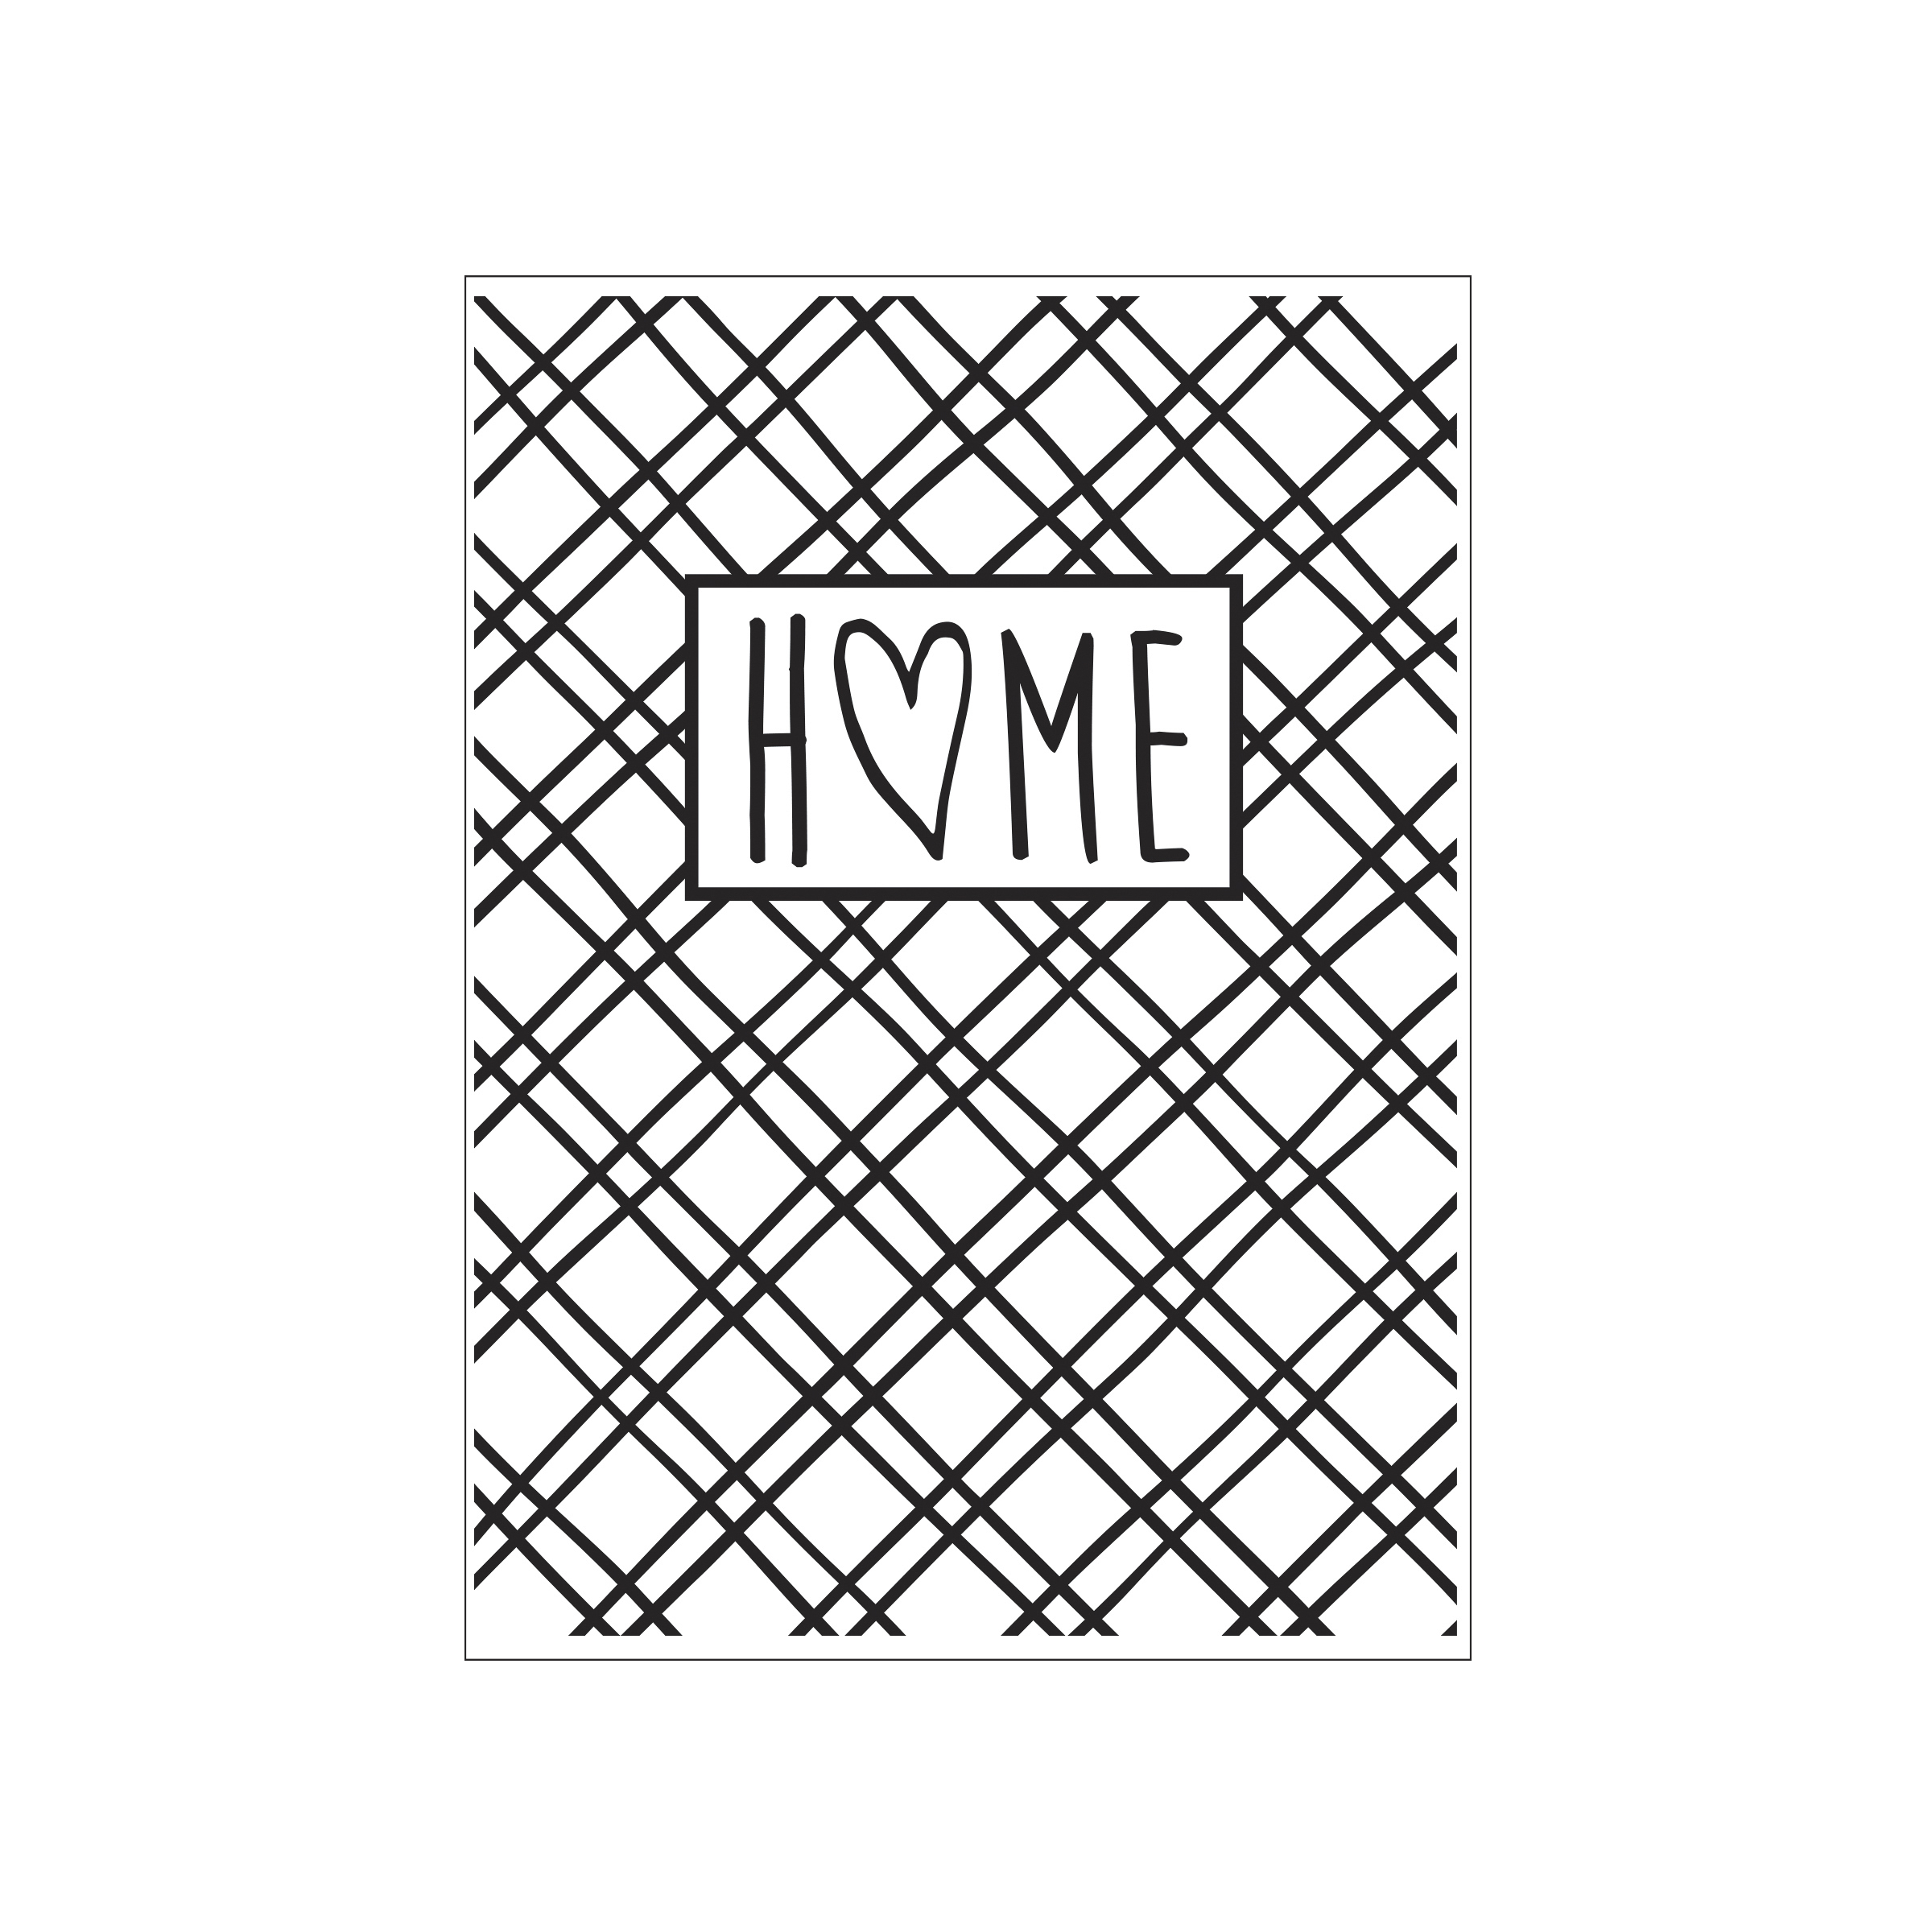 Darice • Classeur de Gaufrage home avec motif diagonal